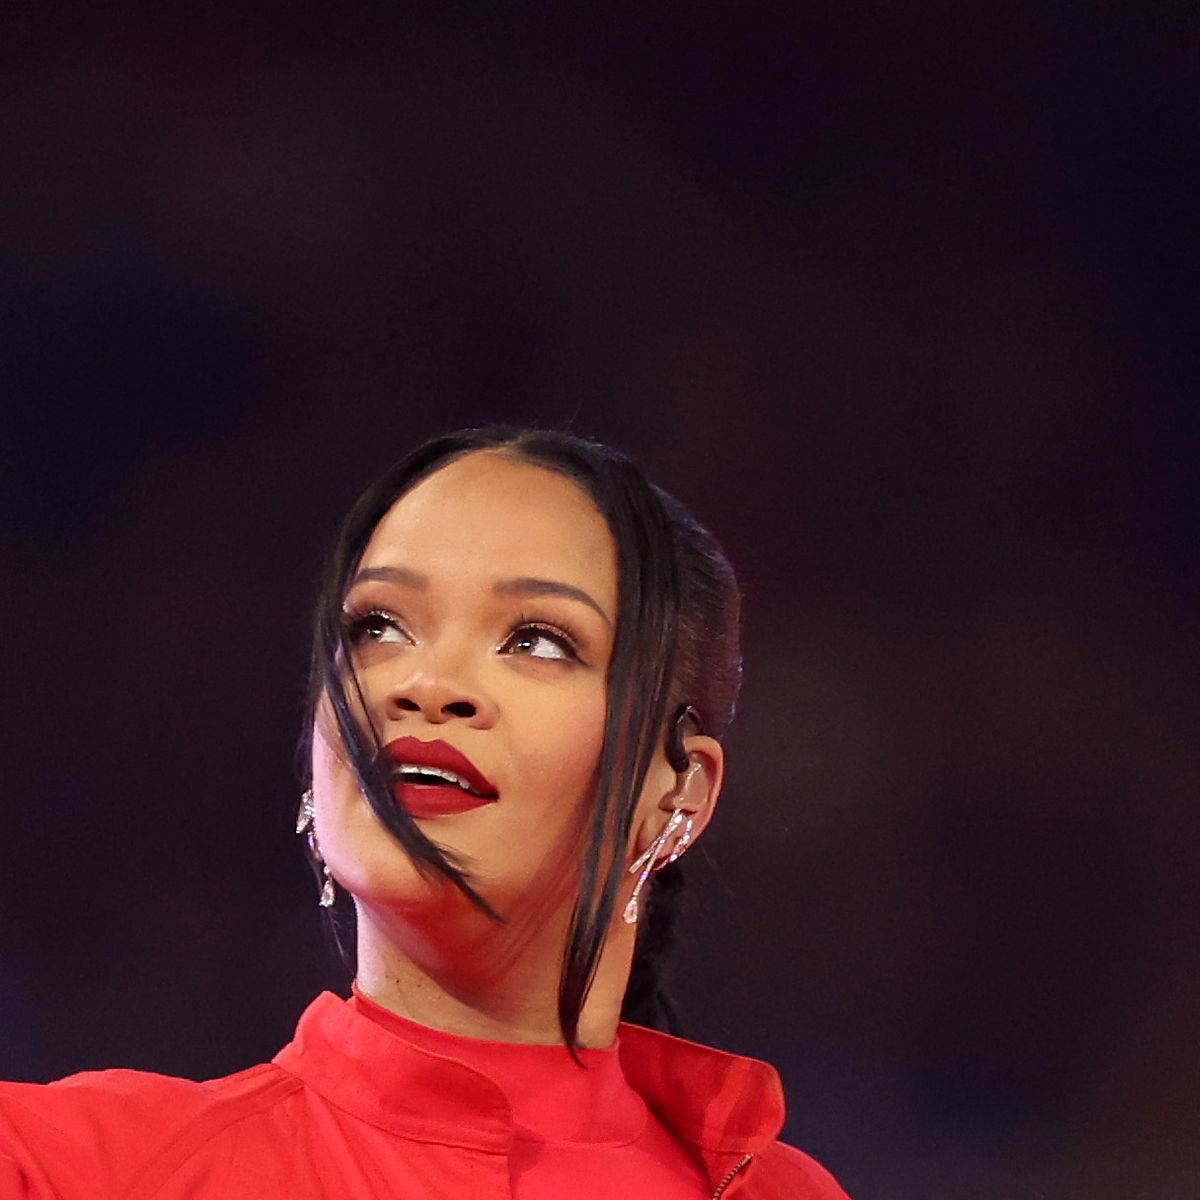 Rihanna's Fenty Beauty Foundation: What shades are available, cost